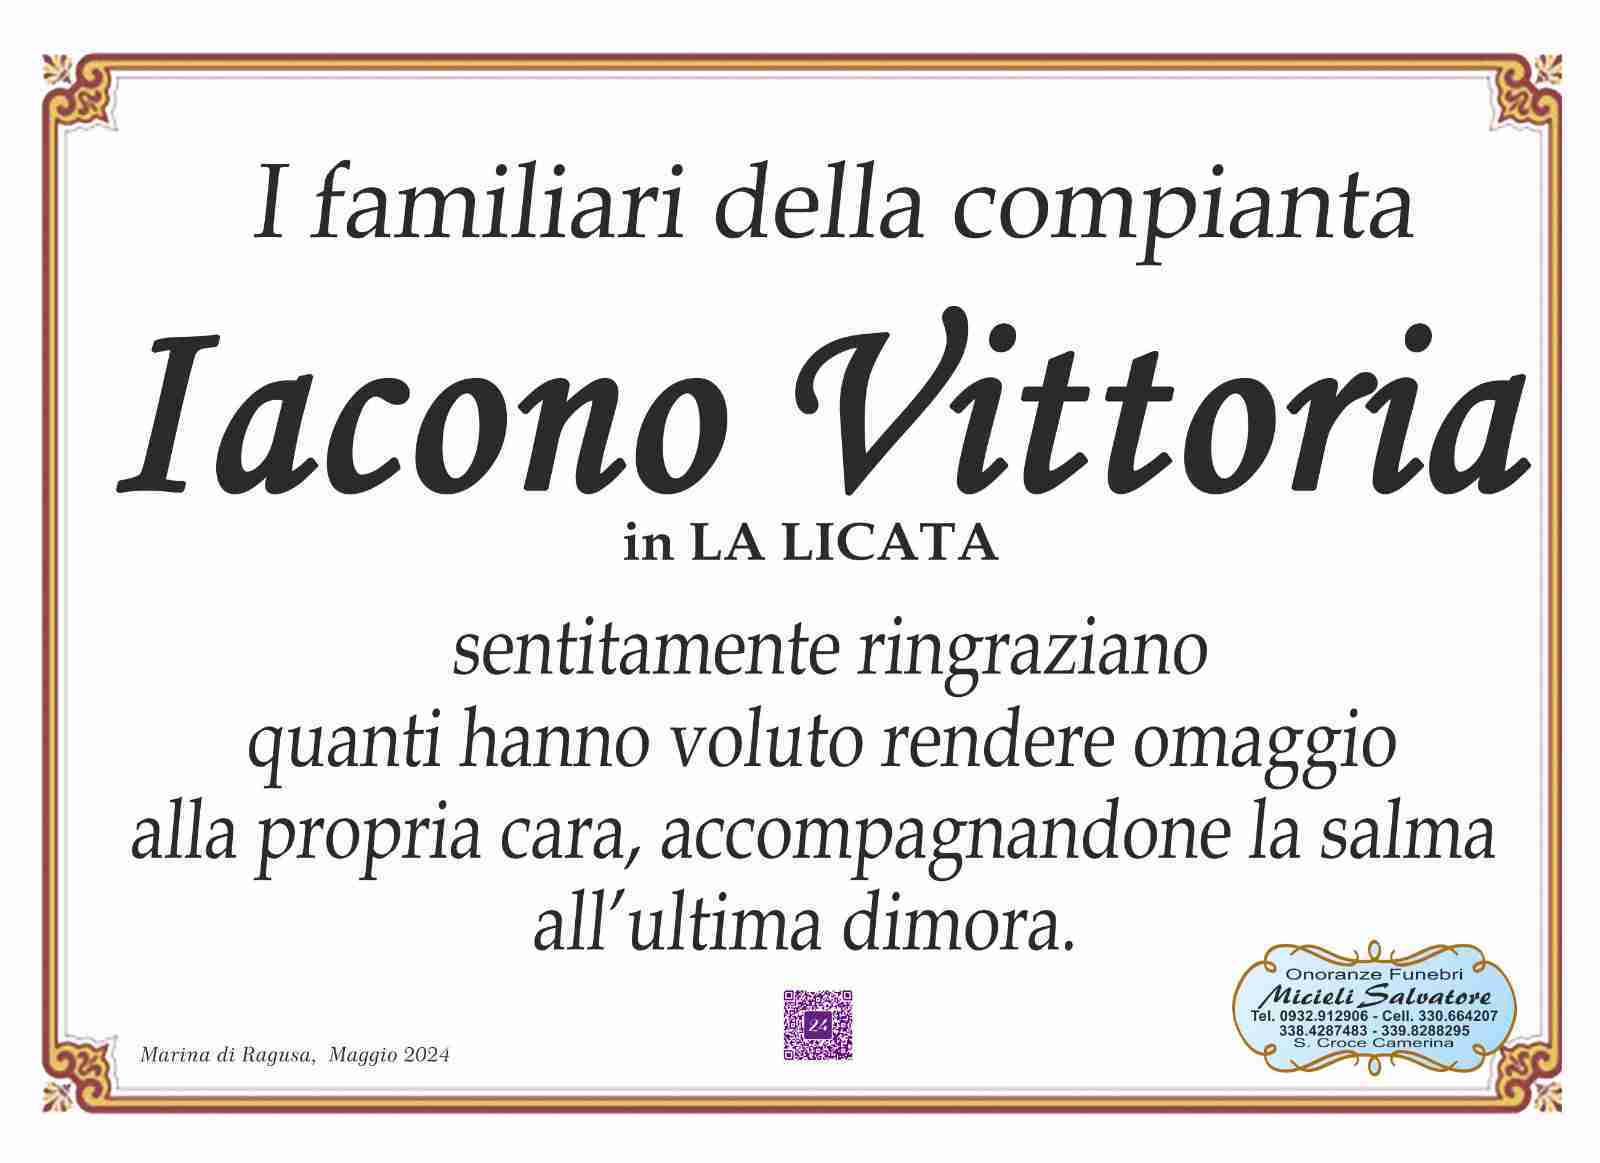 Vittoria Iacono